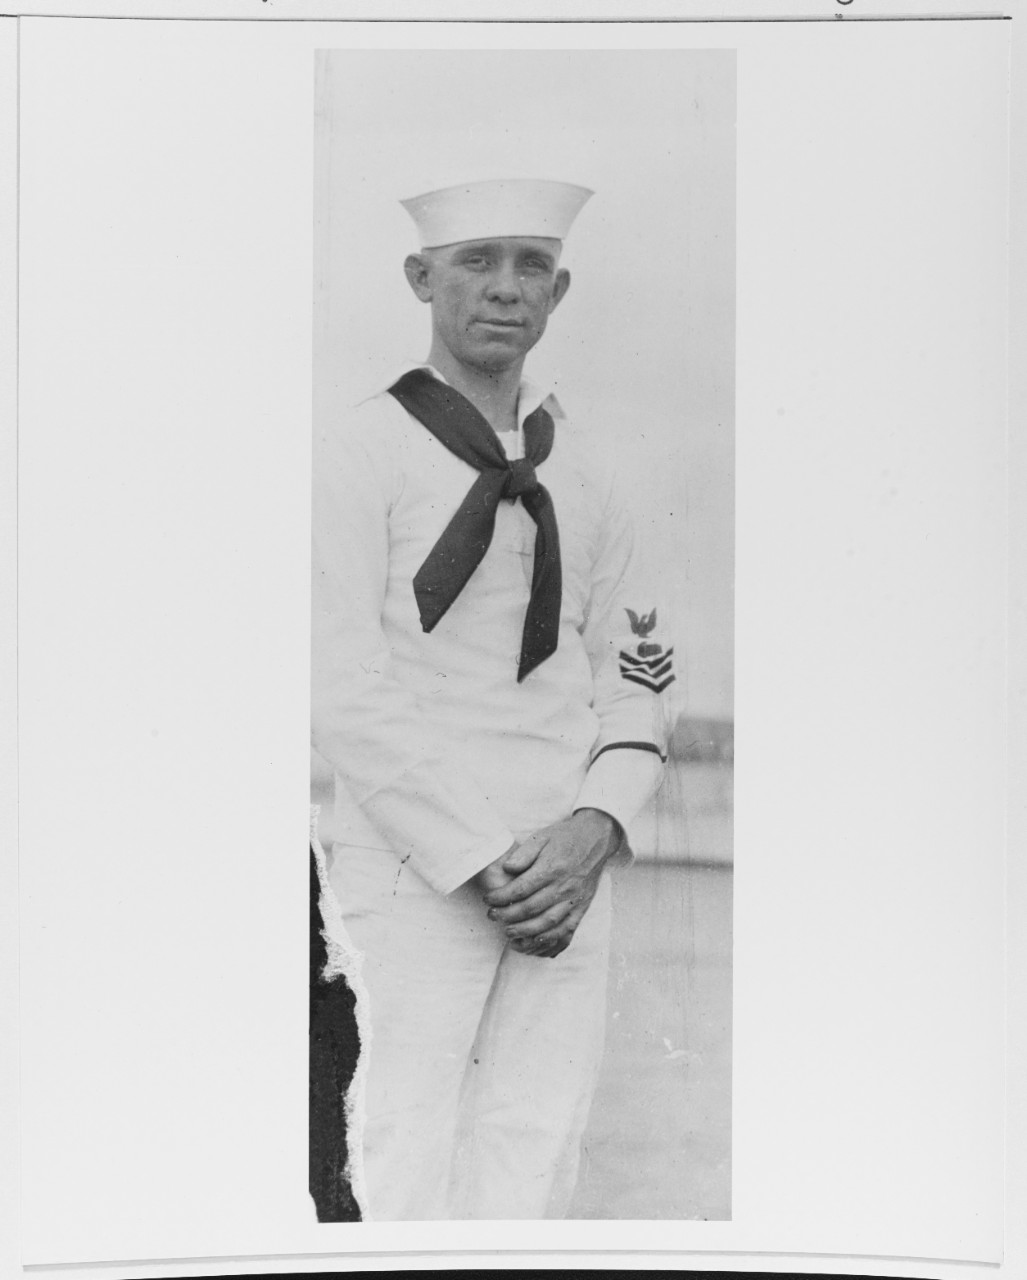 Petty officer Murtha